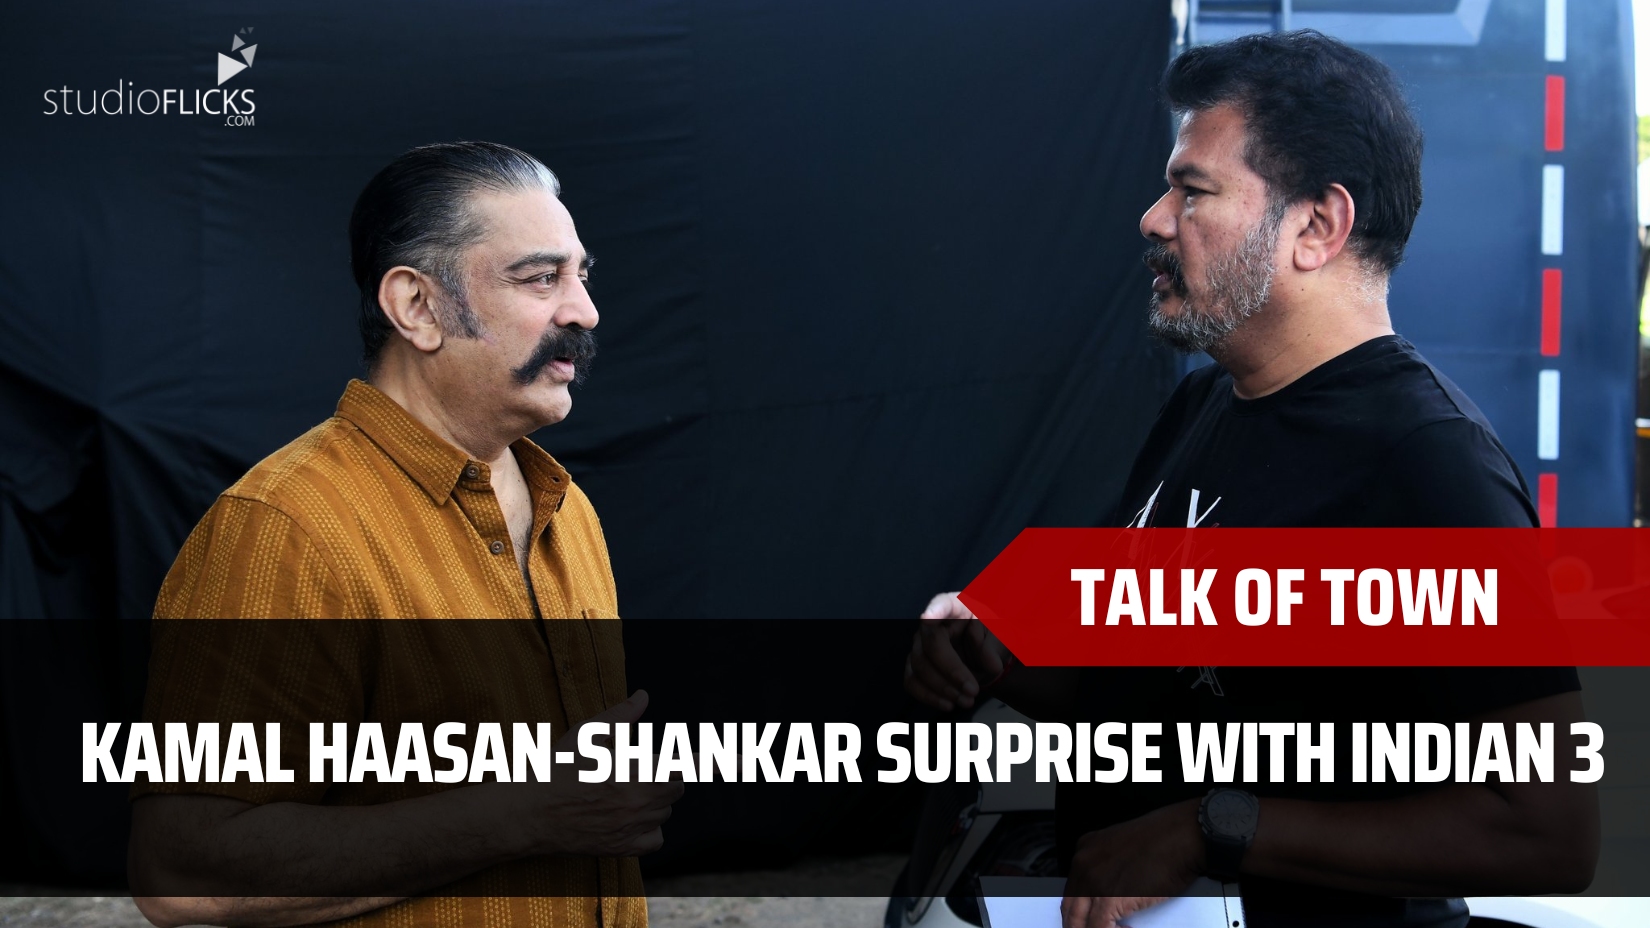 Kamal Haasan Shankar surprise with Indian 3